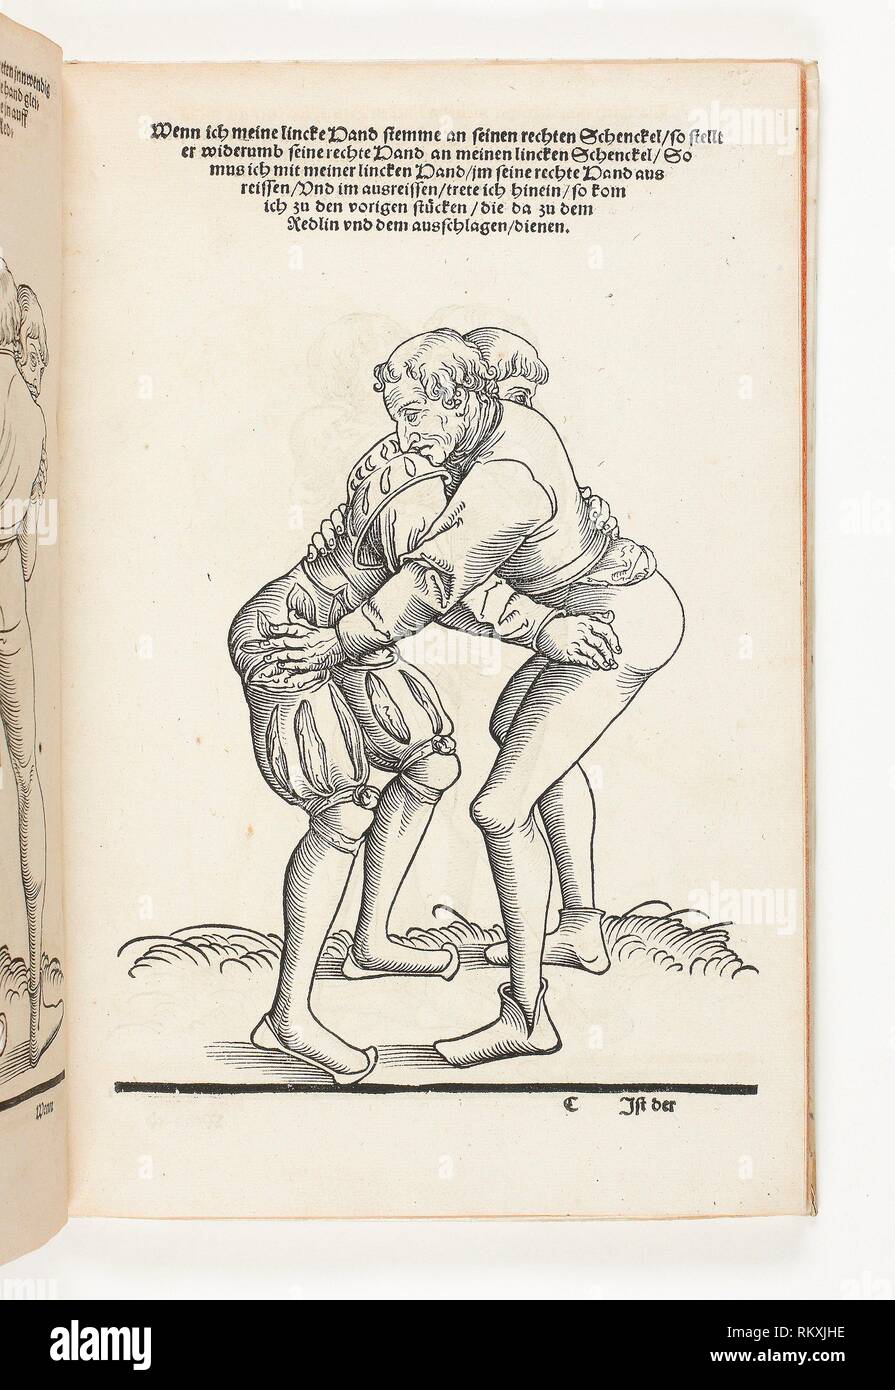 The Art of Wrestling: Eighty-Five Pieces (Ringer Kunst: Fünff und Achtzig Stücke) - 1539 - Lucas Cranach the Younger (German, 1515-1586) written by Stock Photo